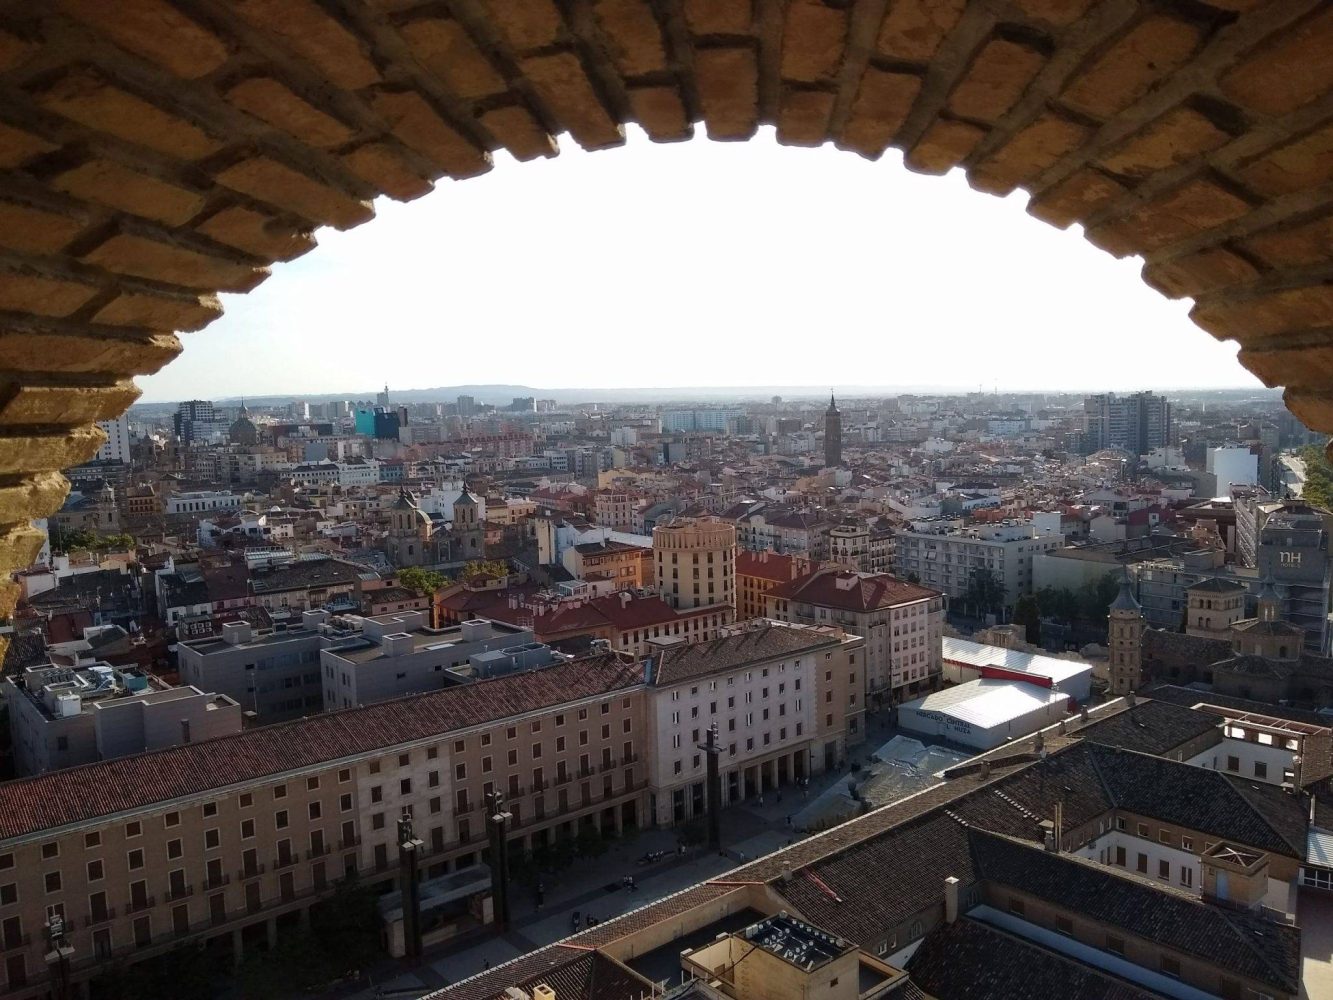 overlooking the city of Zaragoza